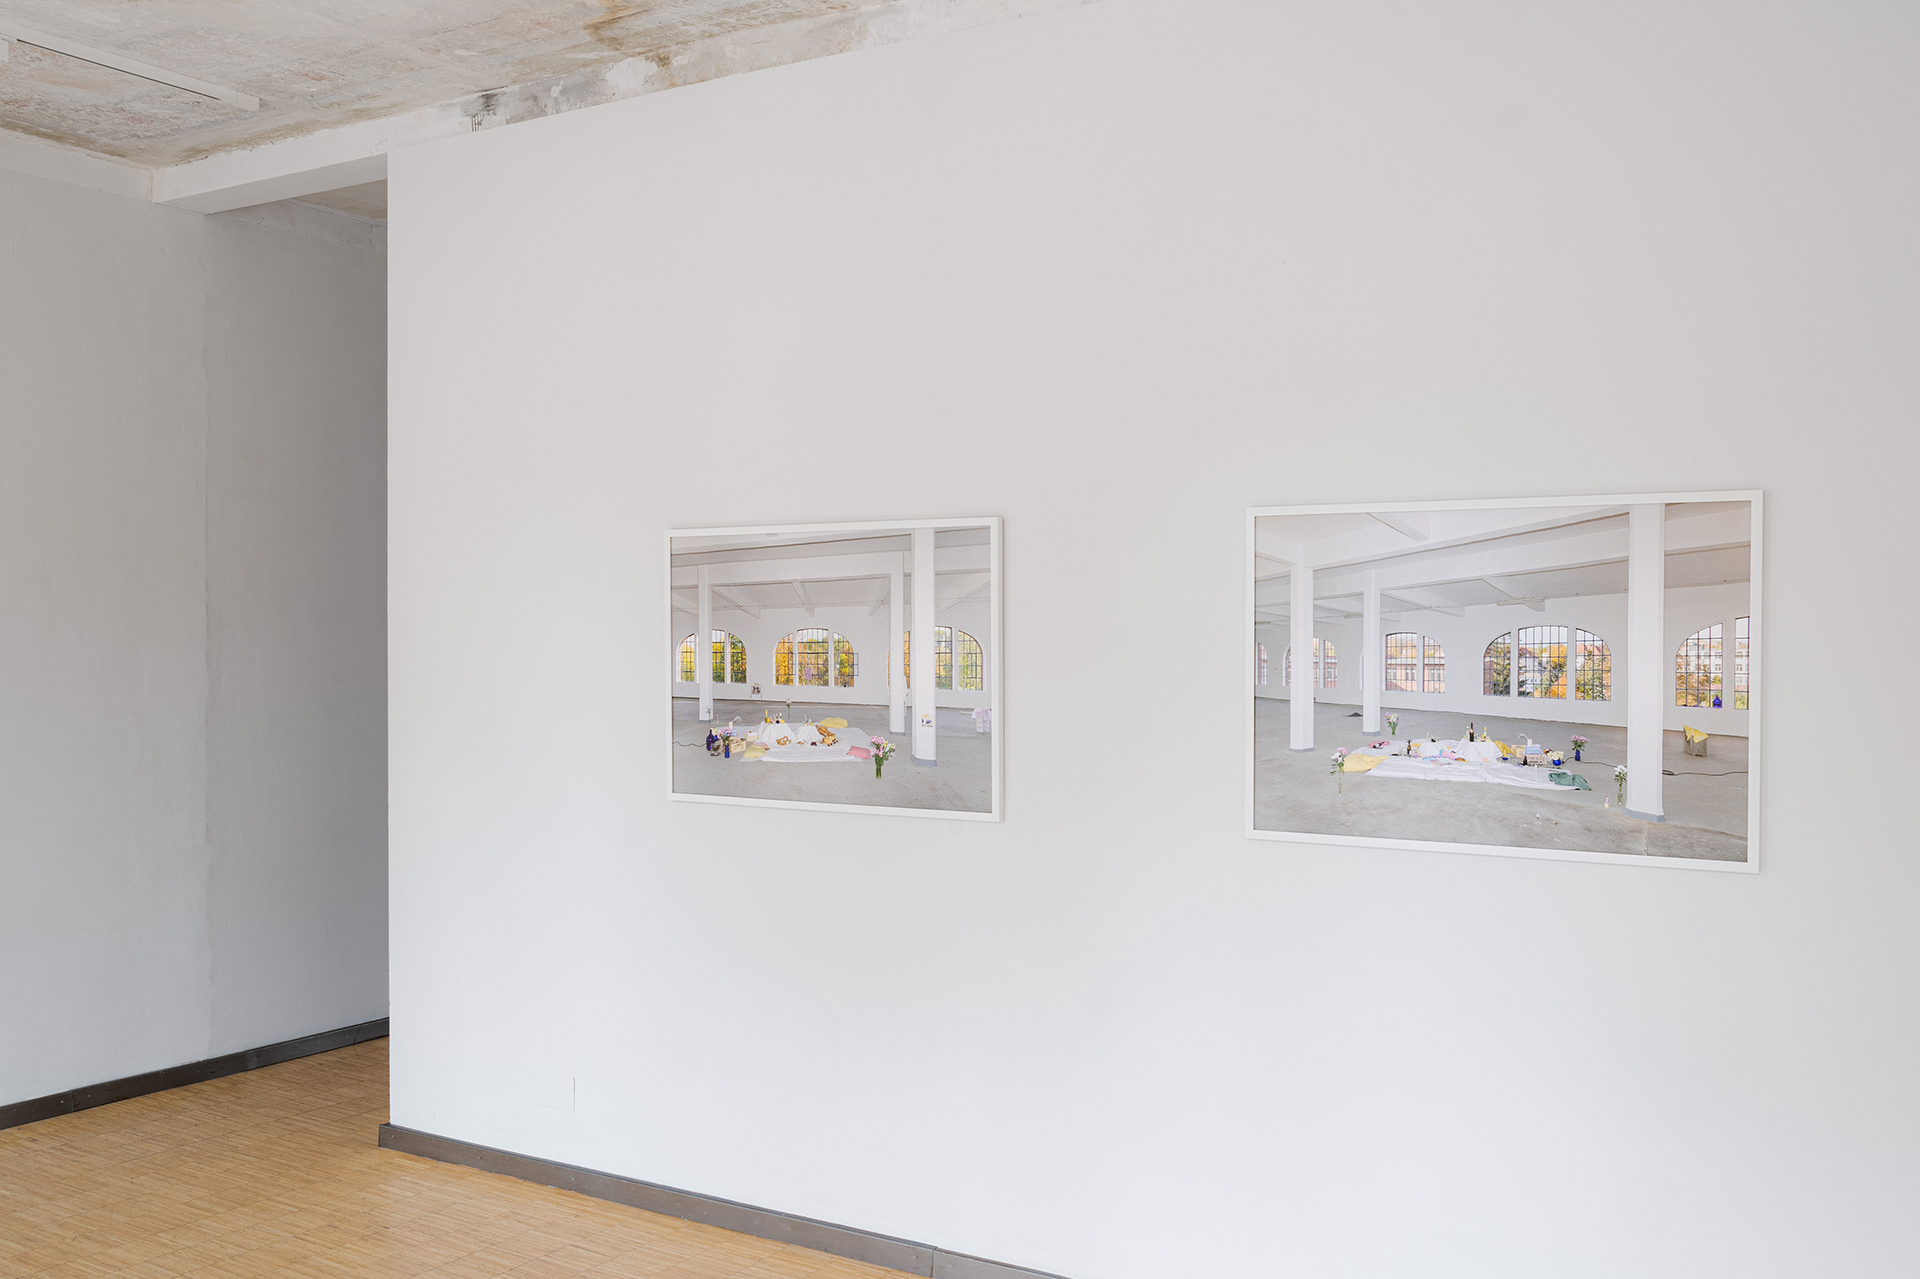 Jannis Uffrecht, Anna Rupp – Die Ästhetik der Zitrone, 2022, 2 archival pigment prints on Baryta paper, mounted on Dibond, framed, 70 x 100 cm each